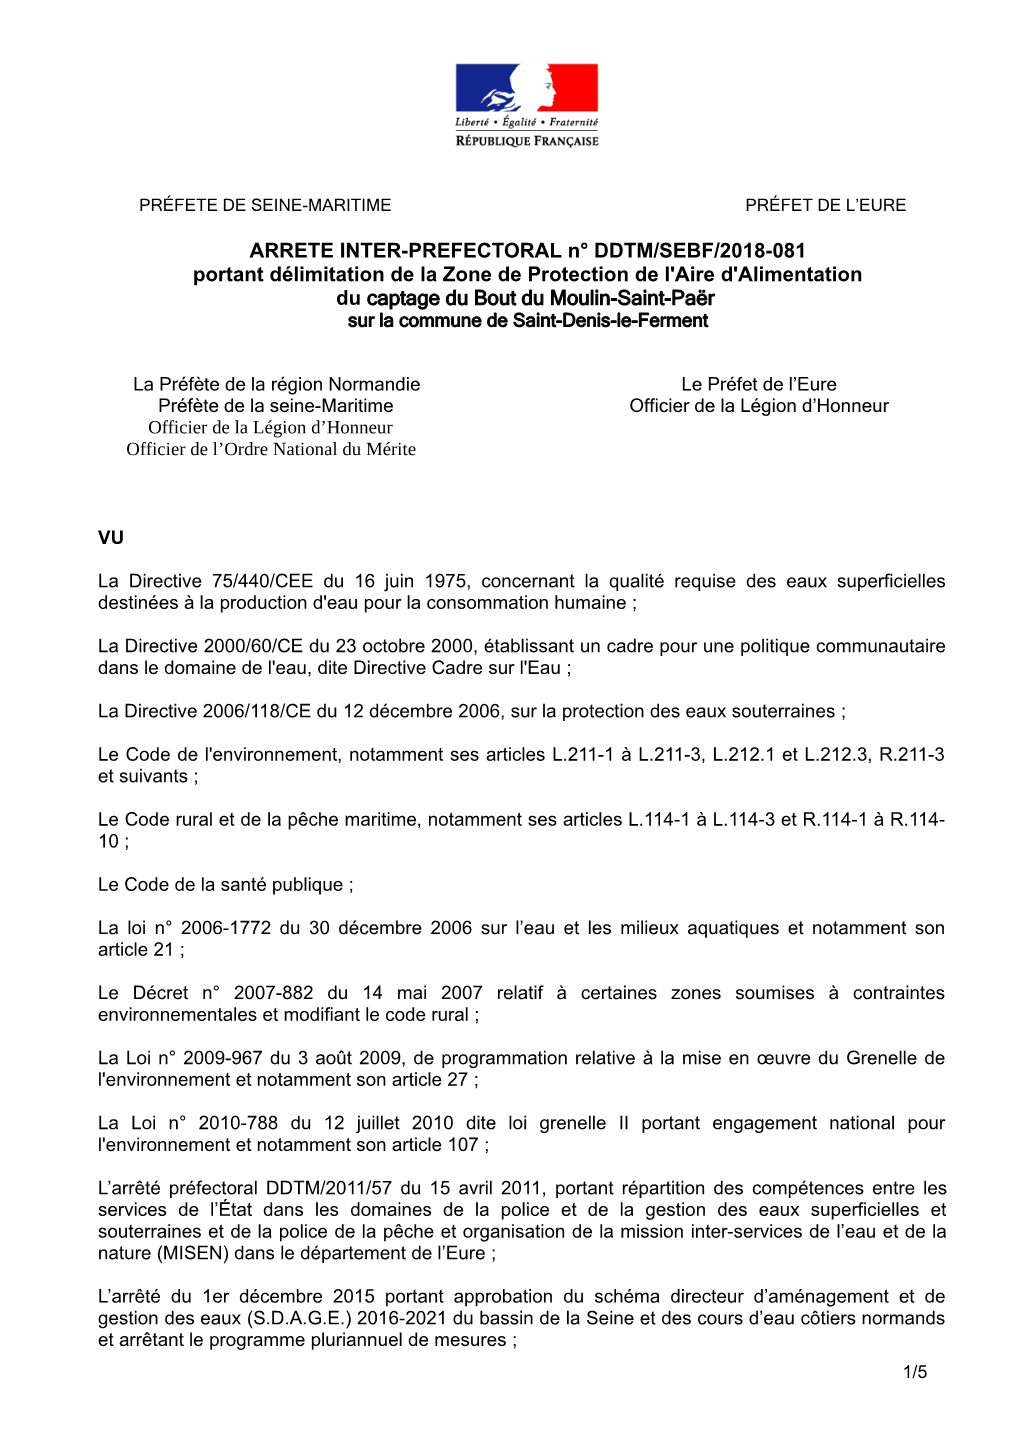 ARRETE INTER-PREFECTORAL N° DDTM/SEBF/2018-081 Portant